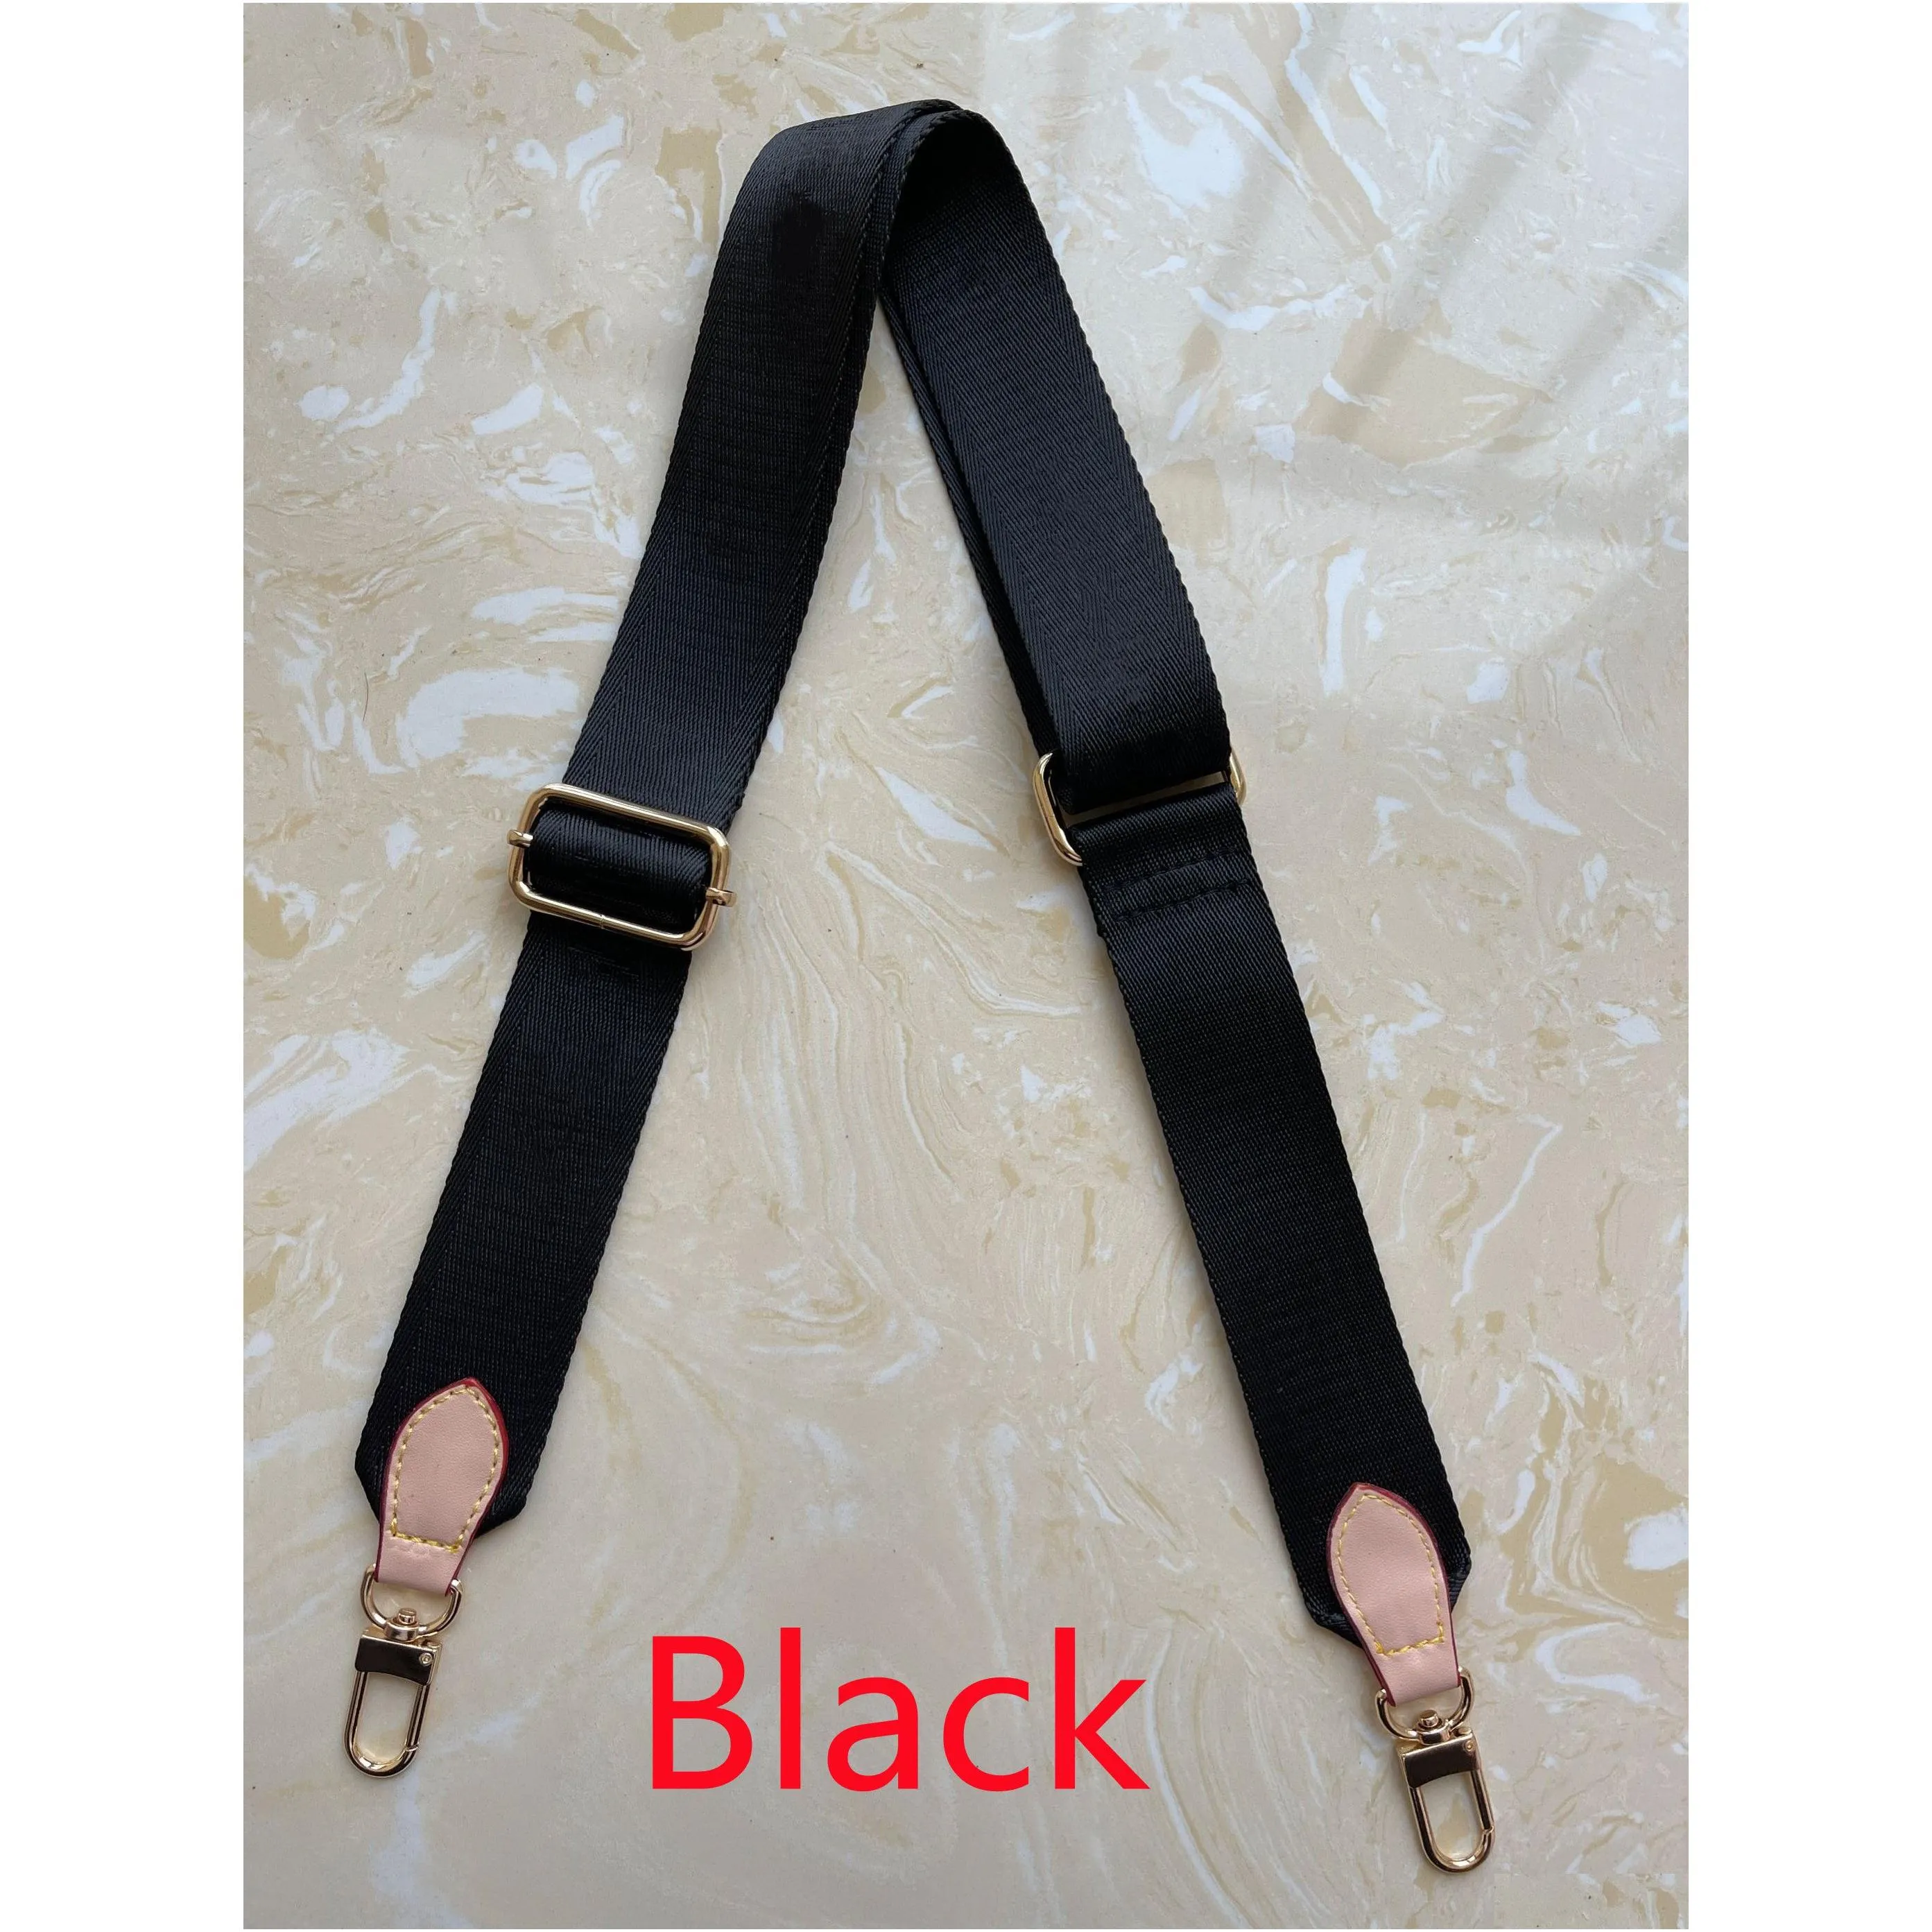 enough stock brand designer bag strap for women 70 to 120 cm crossbody bags belt straps fashion shoulder purse